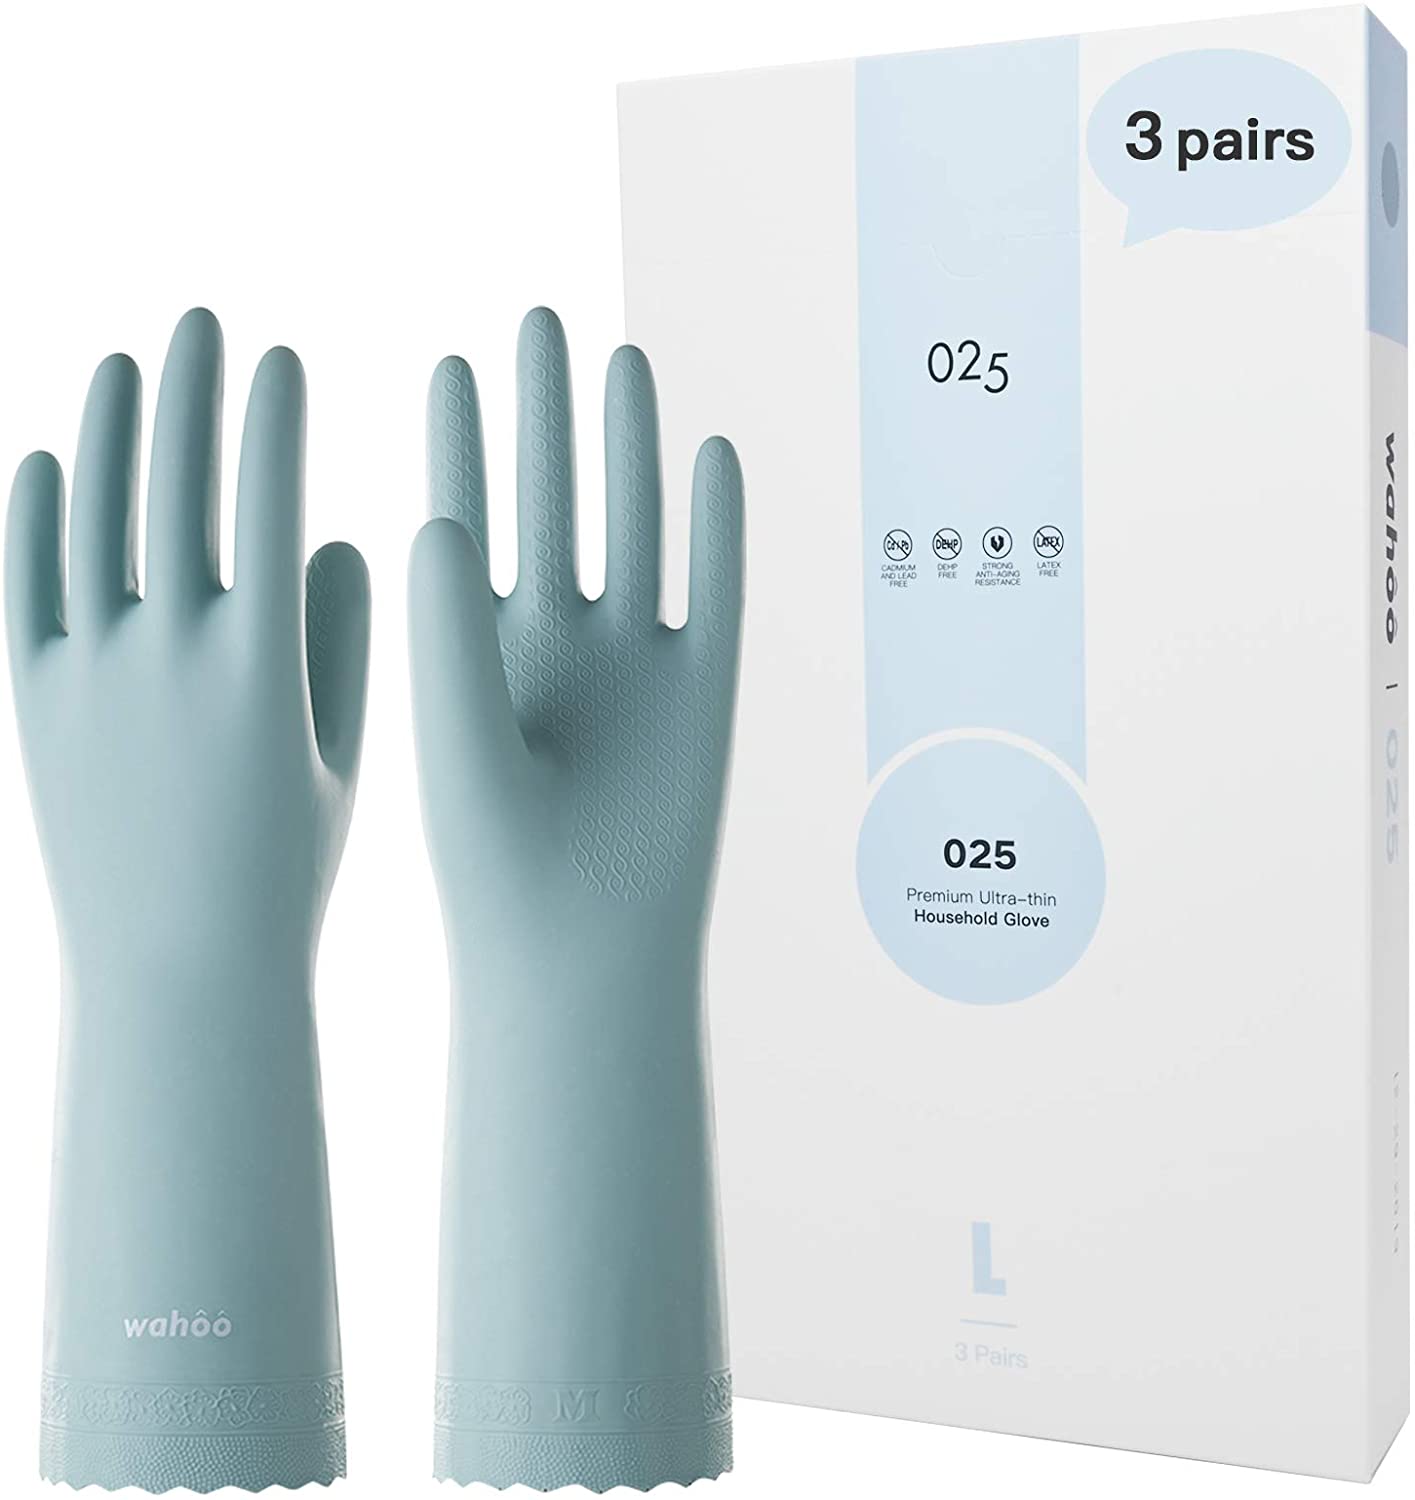 WF76 丨 Flocom Flocklined PVC Household Gloves 3 Pairs